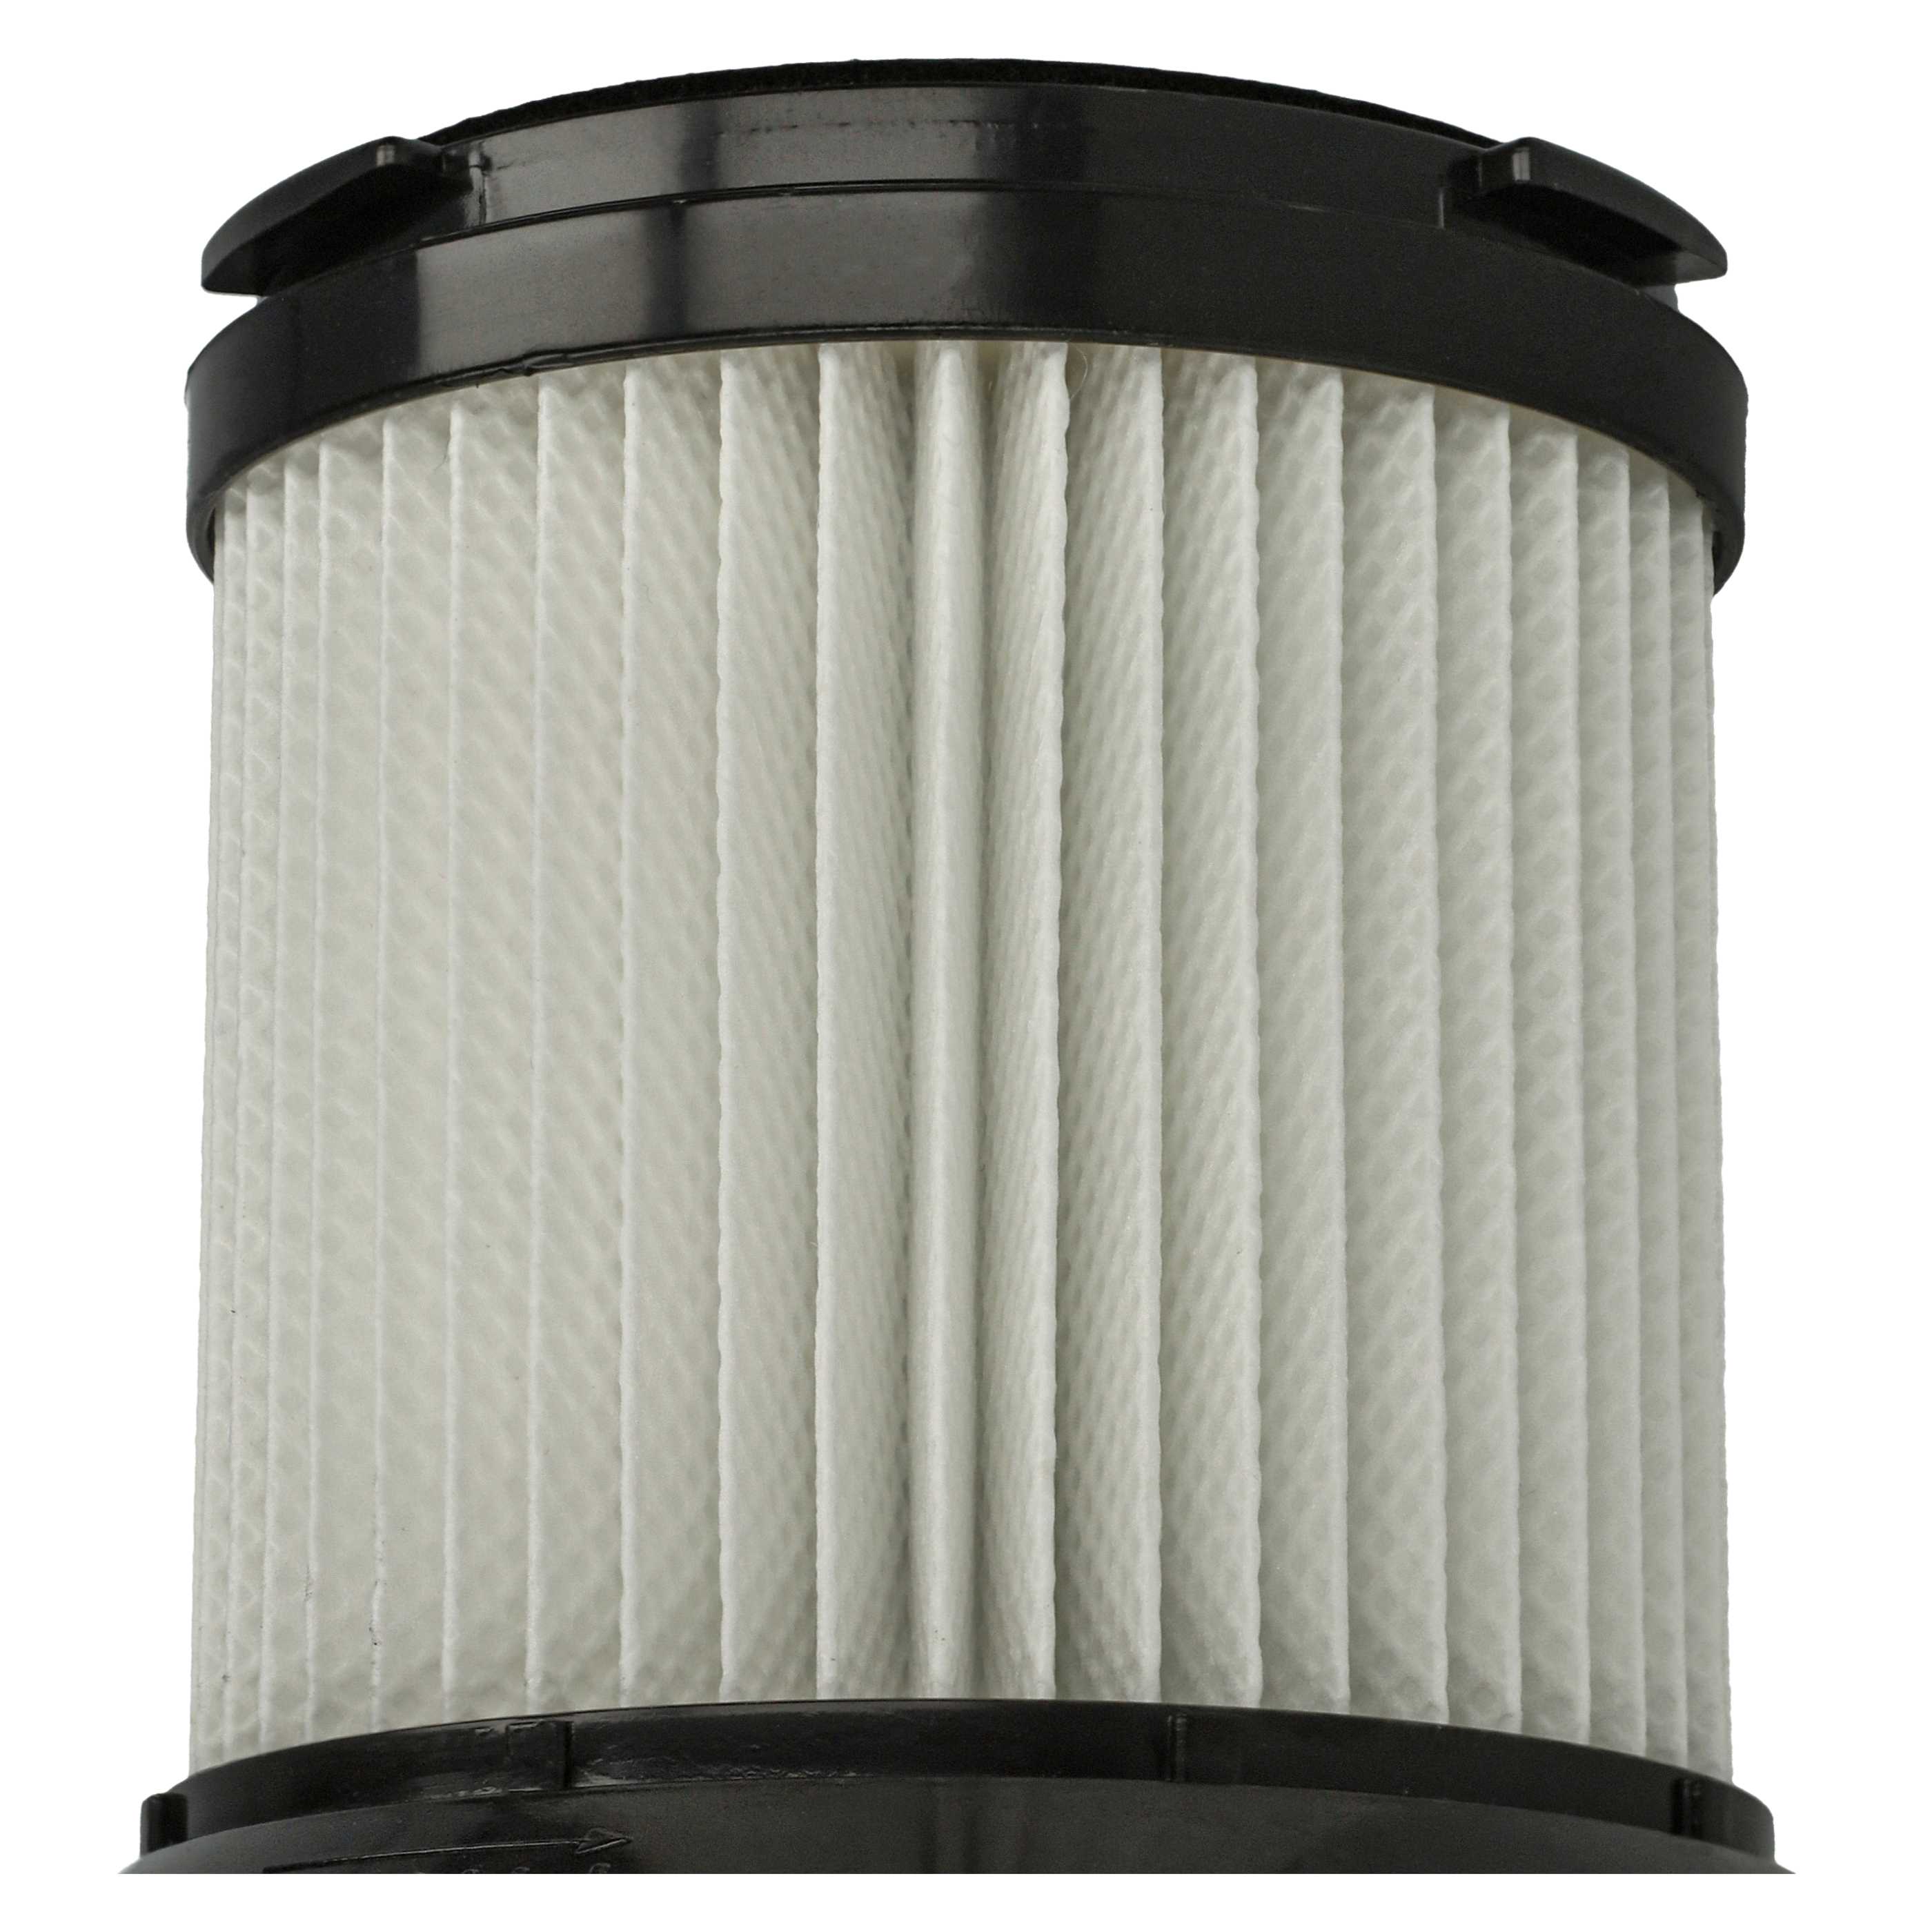 4x Filtro para aspiradora Sichler Zyklon BLS-200 - filtro Hepa negro / blanco